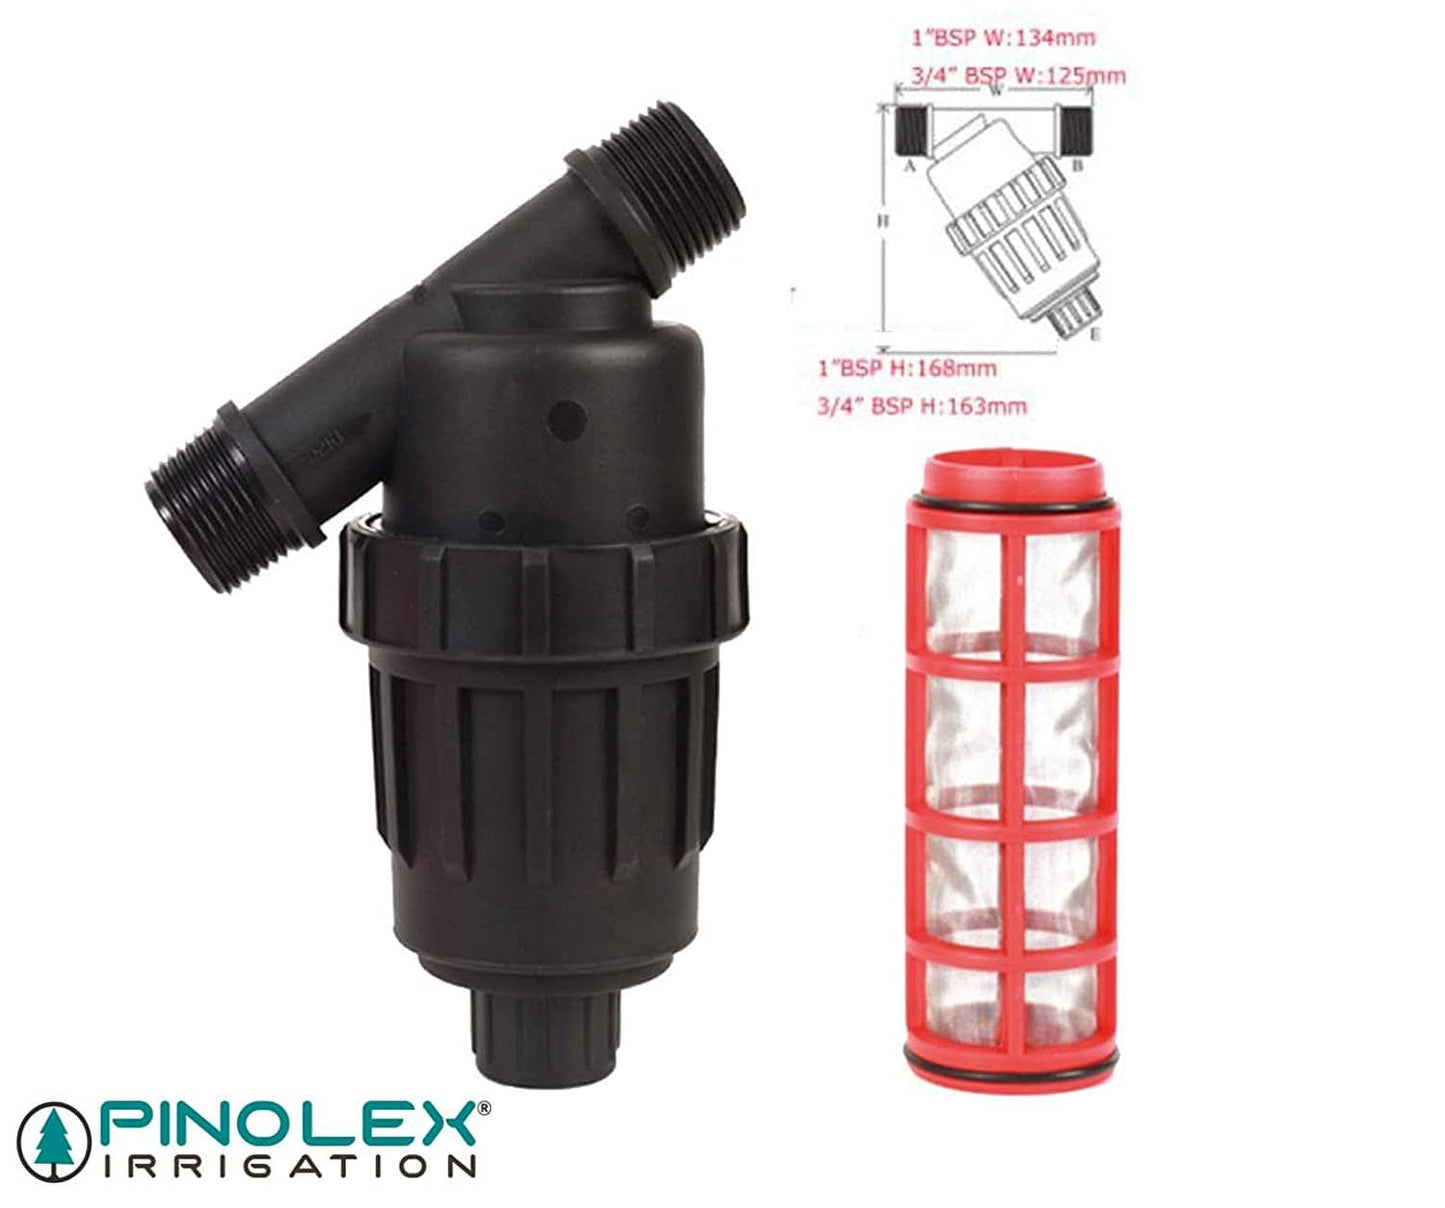 Pinolex Screen Filter for Lawn Irrigation